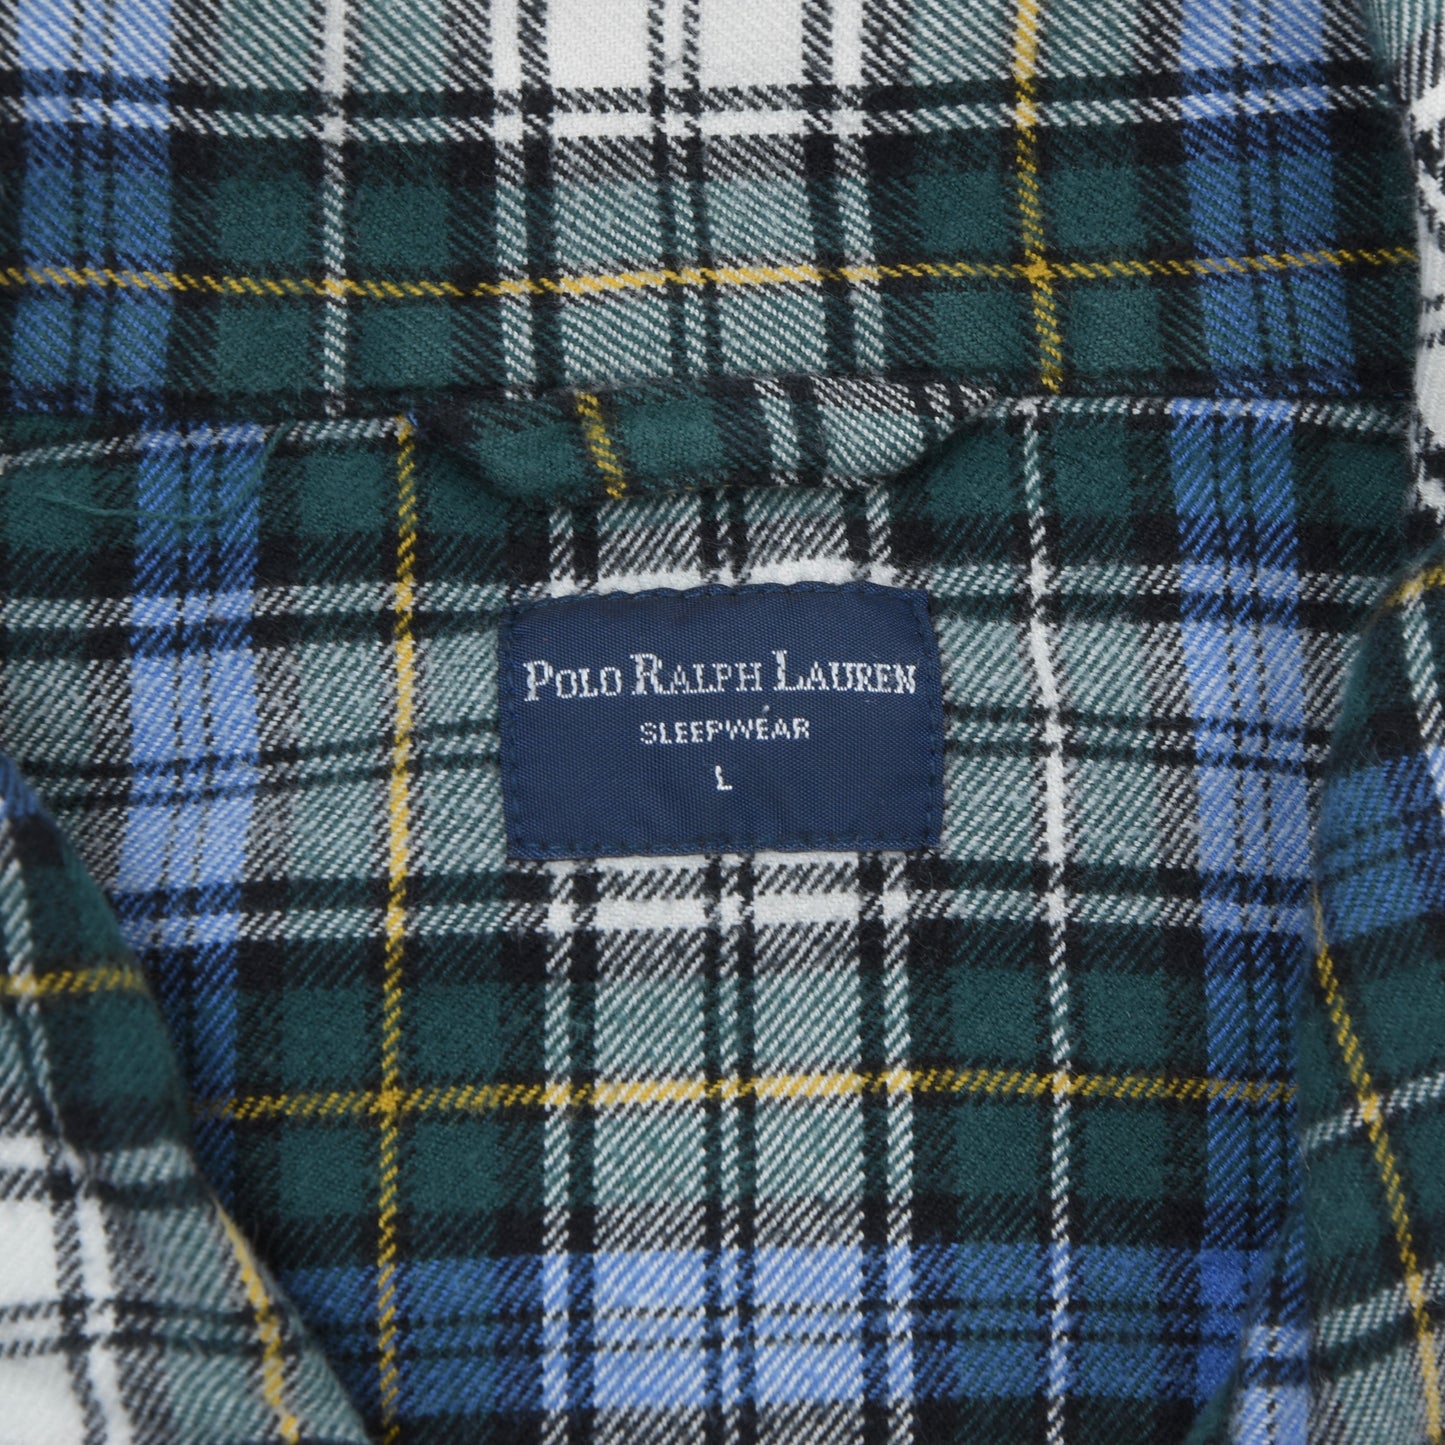 2x Polo Ralph Lauren Cotton Flannel Pyjamas Size L - Tartan